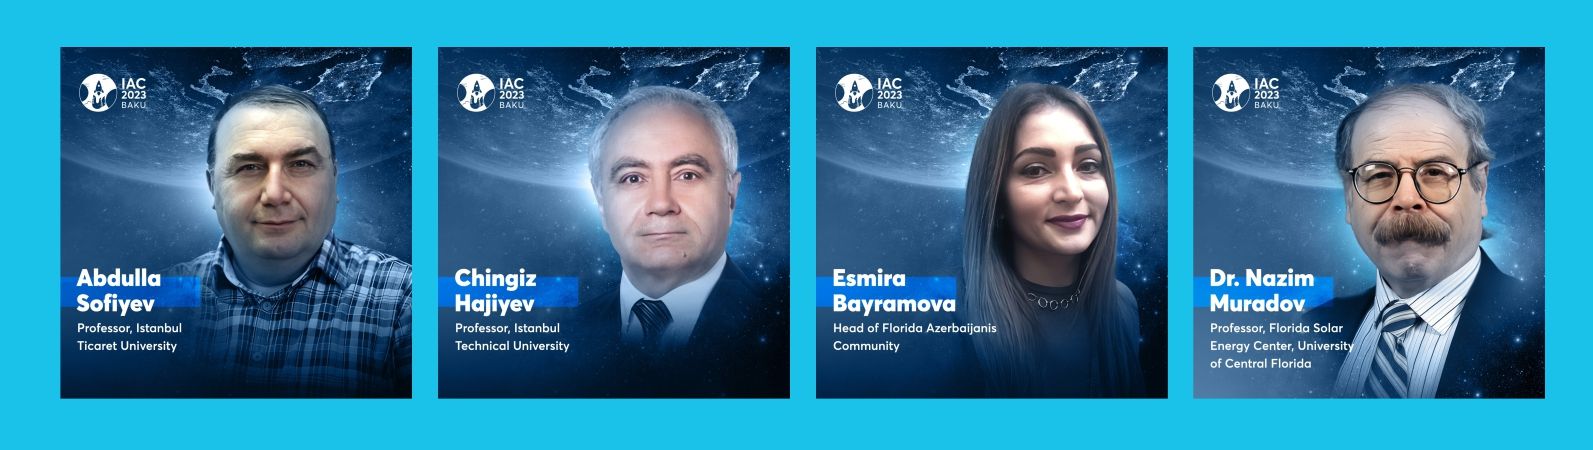 Scientists representing Azerbaijani diaspora will participate in the 74th International Astronautical Congress to be held in Baku